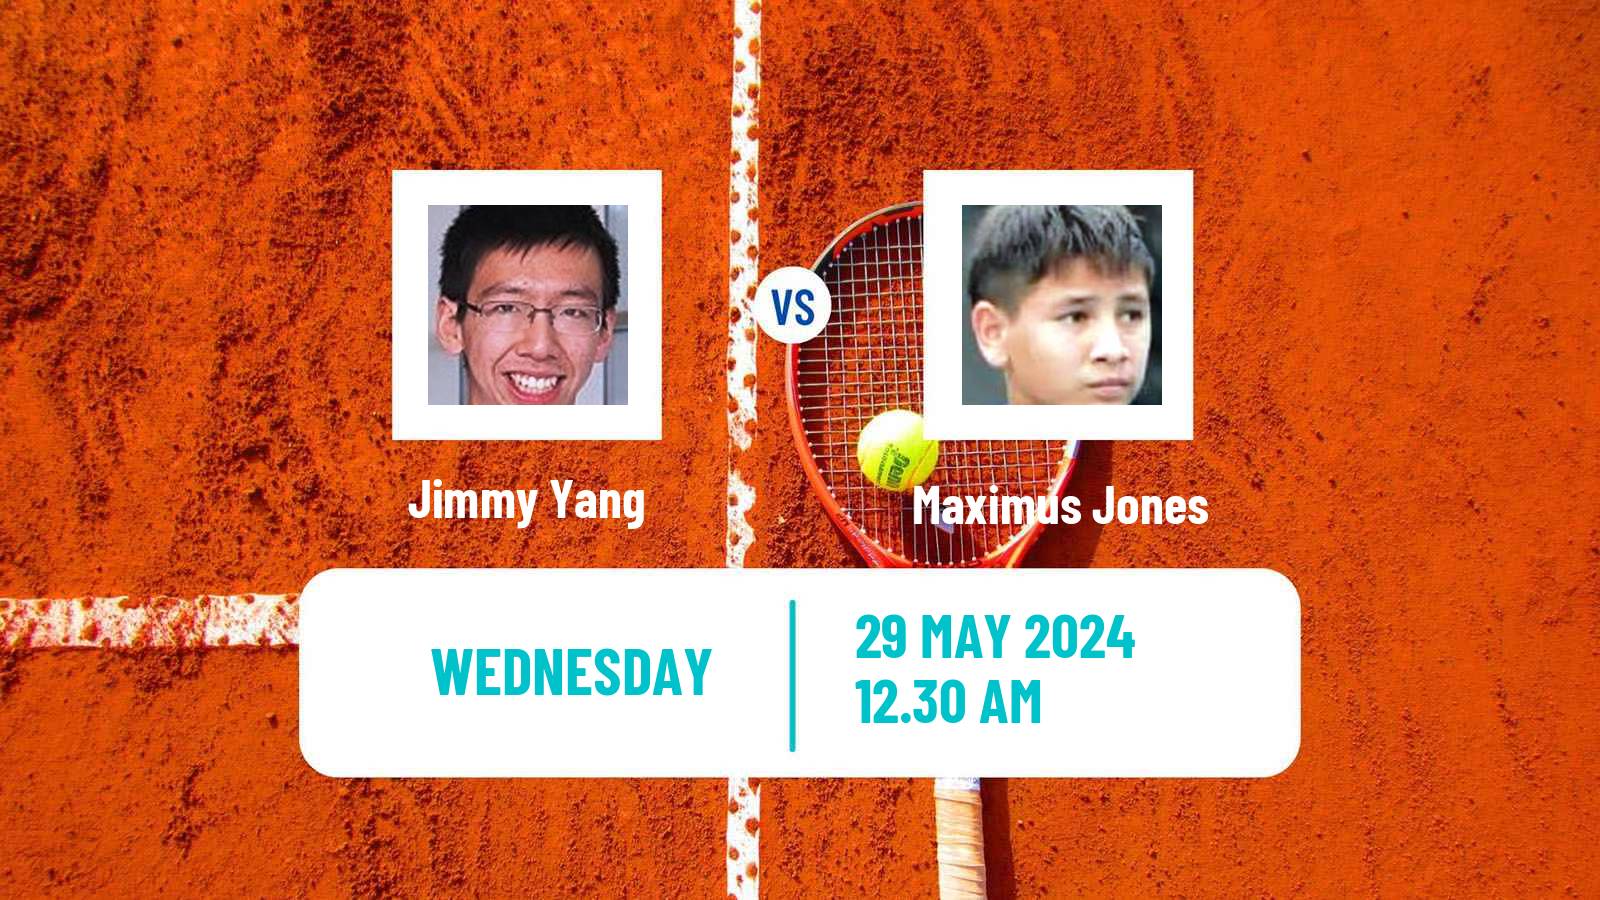 Tennis ITF M25 Baotou Men Jimmy Yang - Maximus Jones